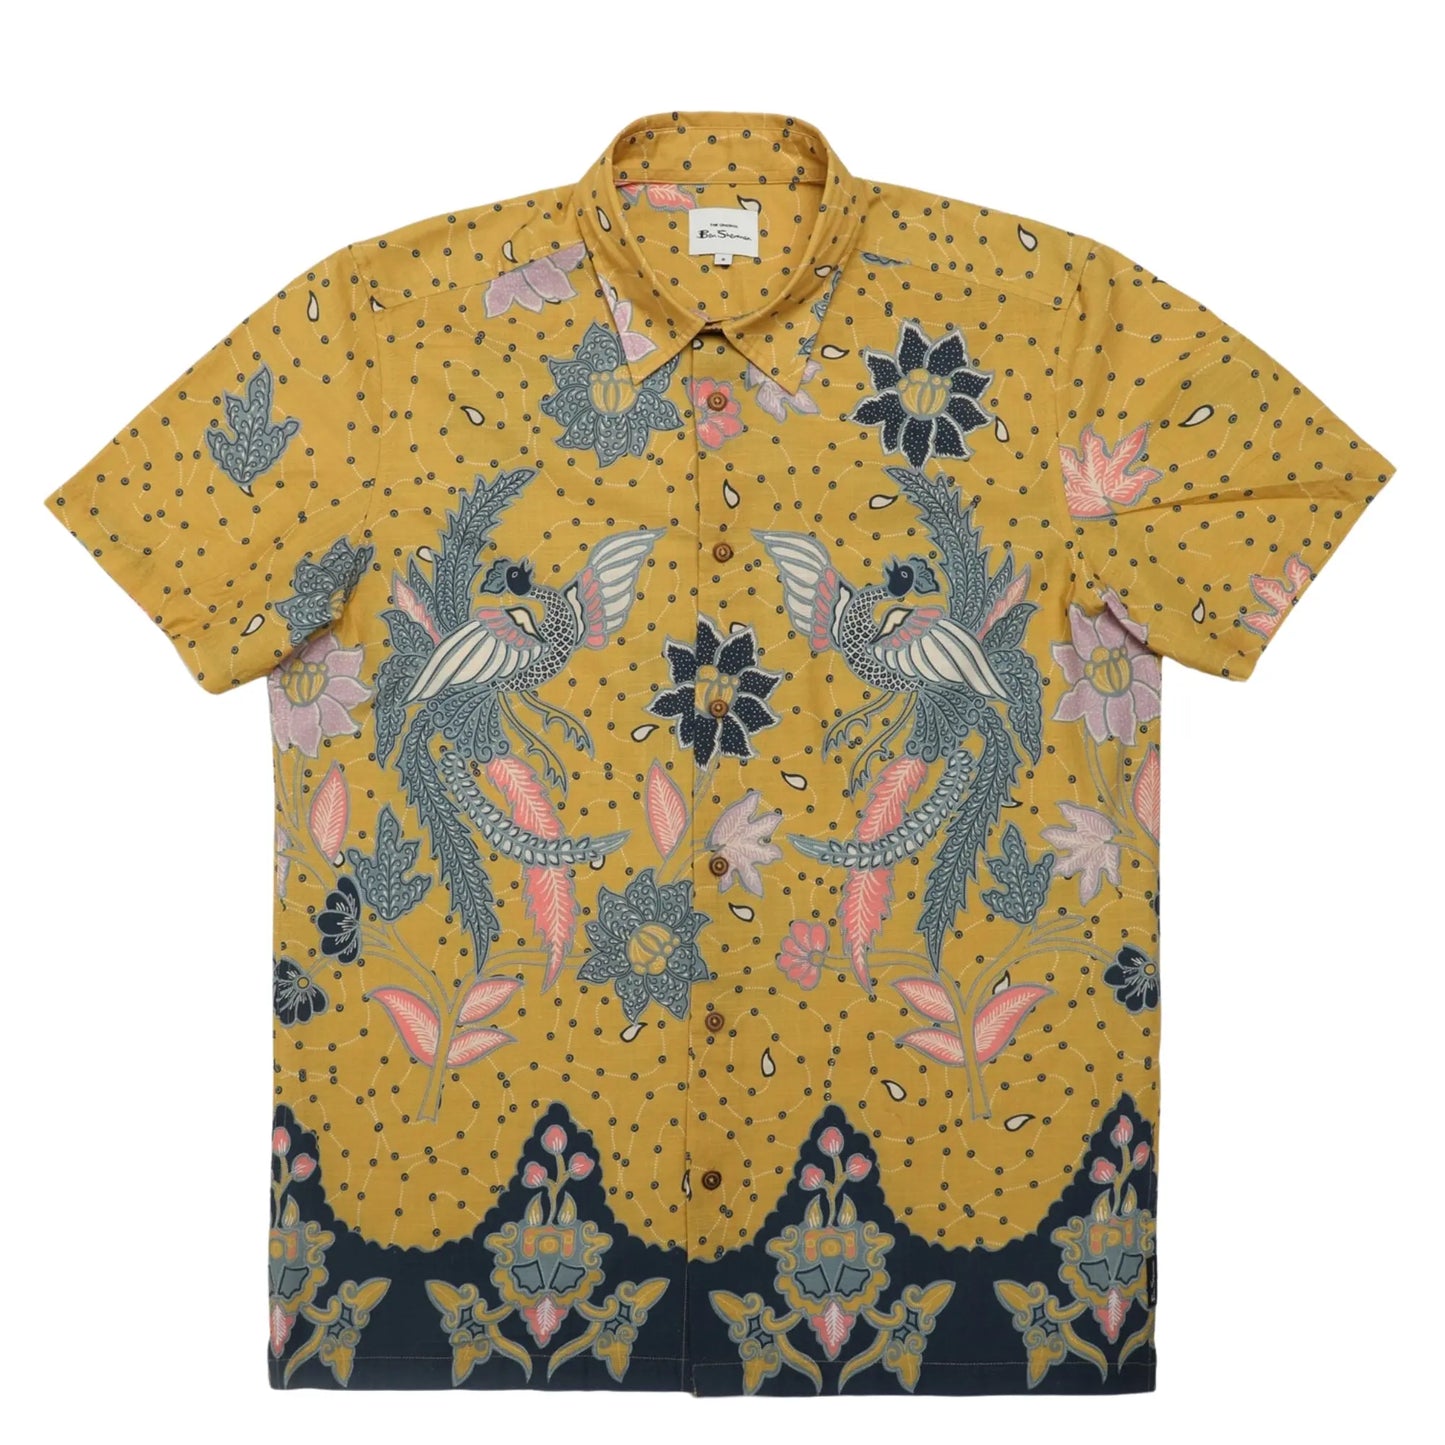 Buy Ben Sherman Abstract Botanical Print Short Sleeve Shirt - Yellow | Short-Sleeved Shirtss at Woven Durham